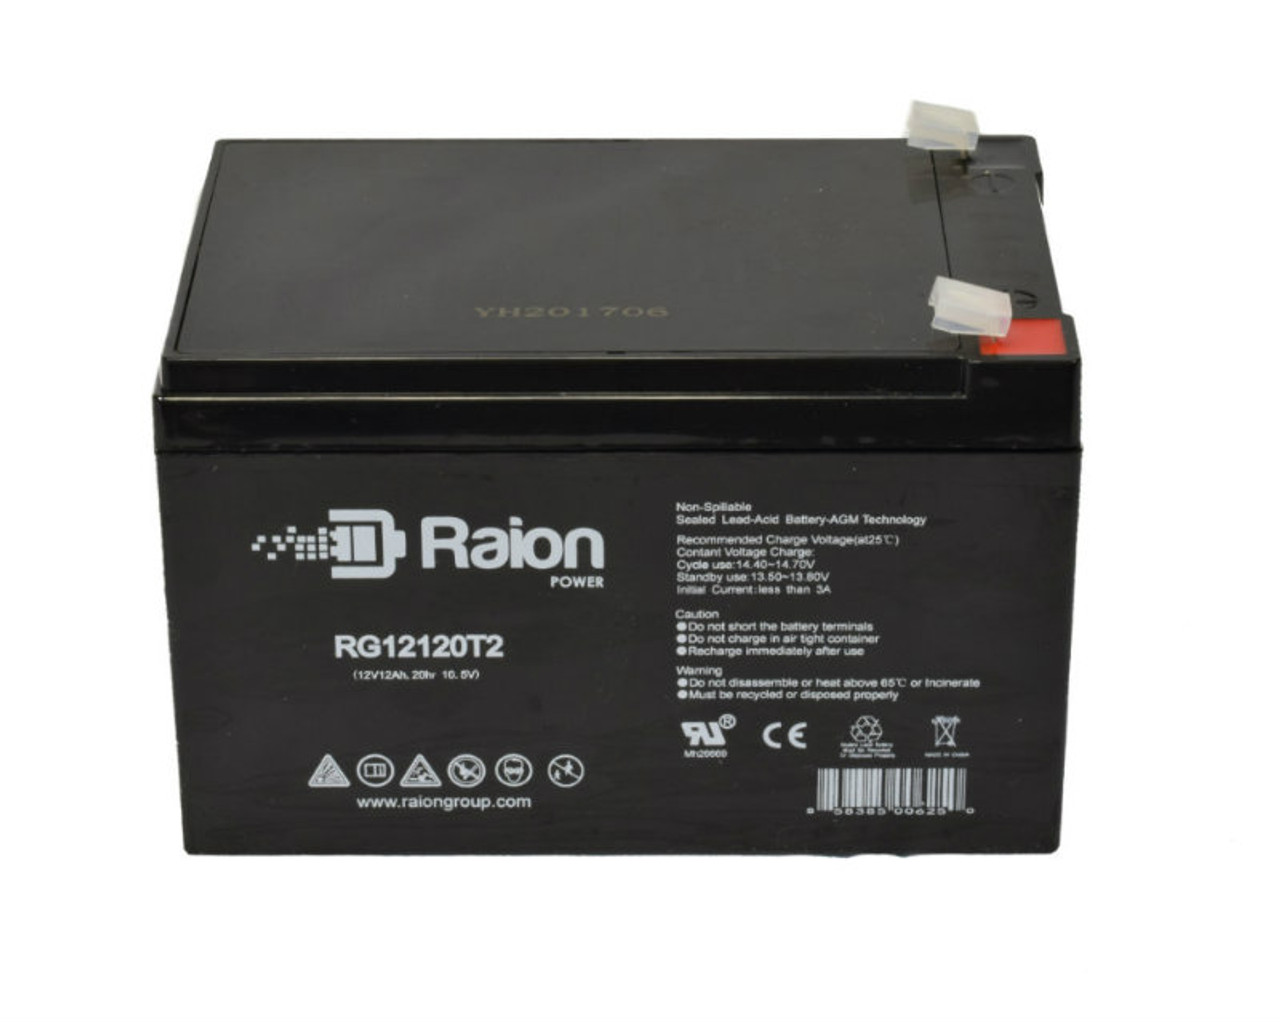 Raion Power RG12120T2 SLA Battery for Safety 1st SF12VB01